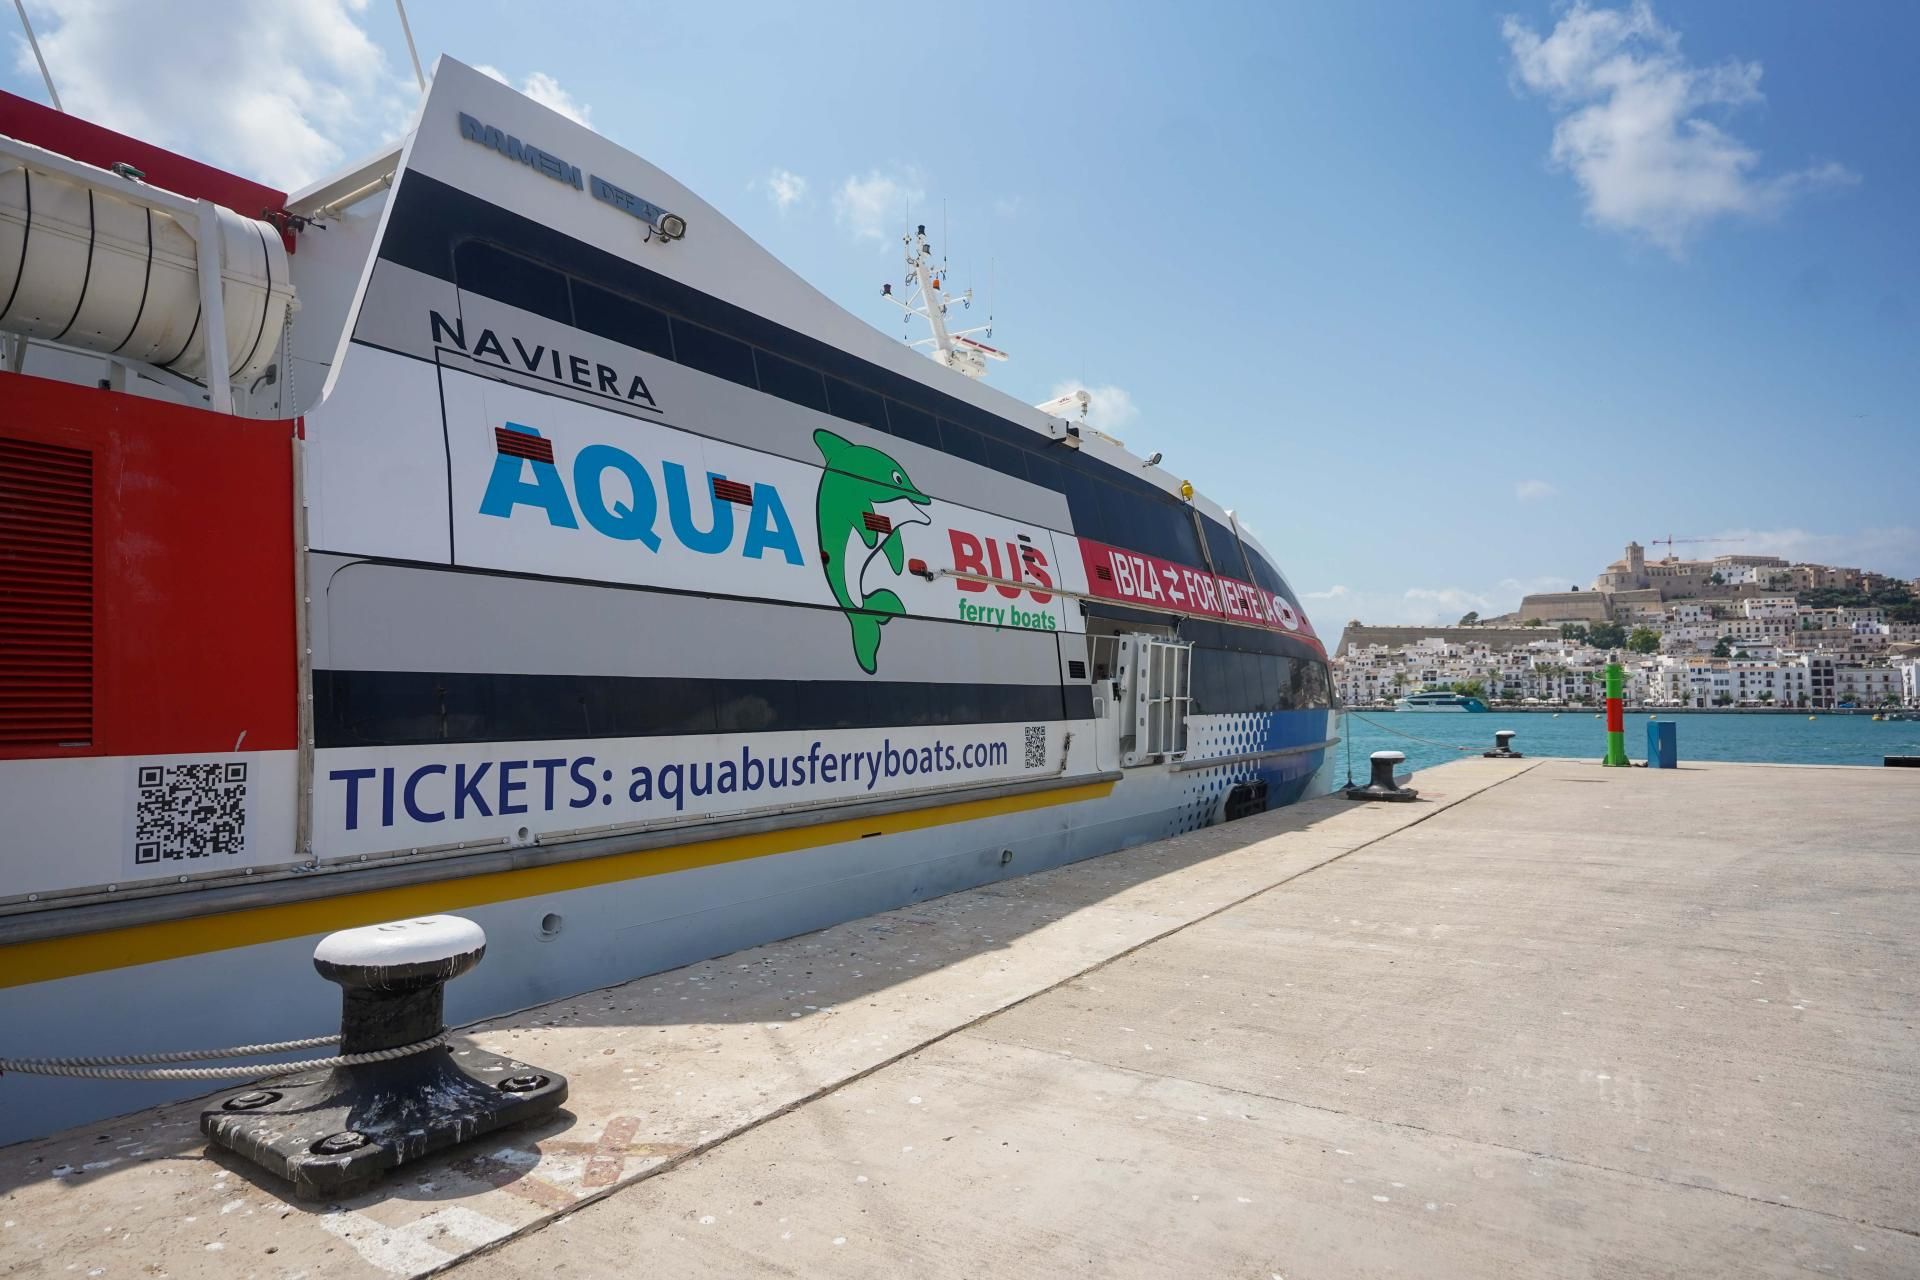 PERIODICODEIBIZA: Aquabus Jet revolutionizes its fleet with two new state-of-the-art vessels